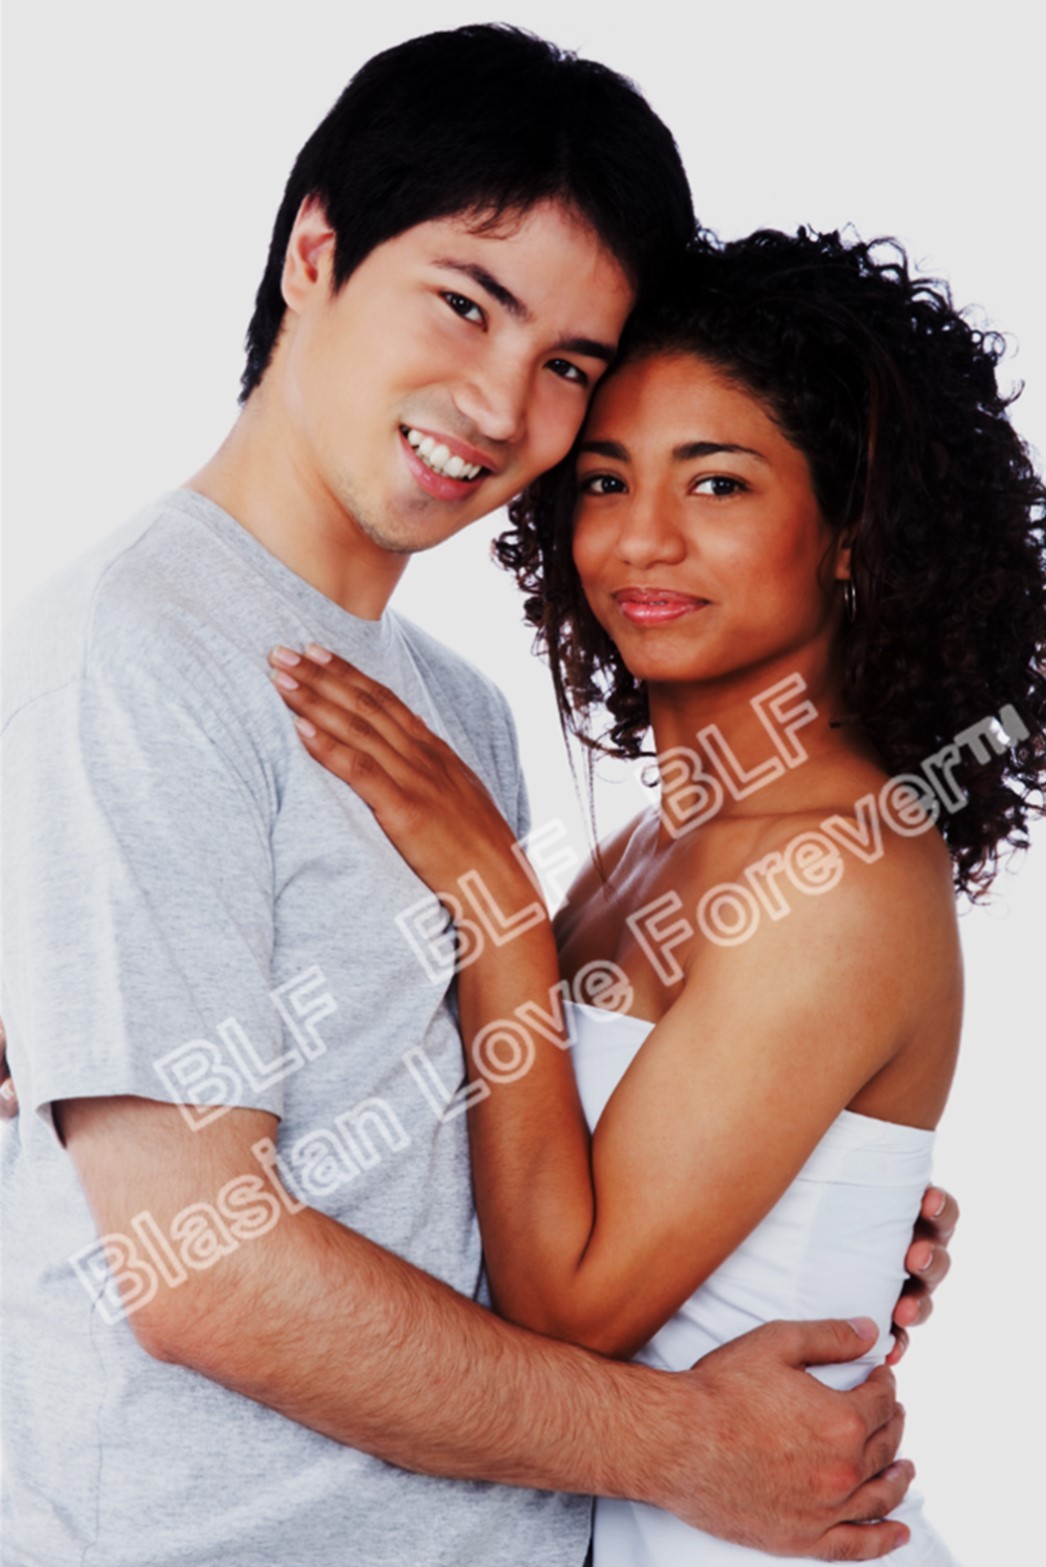 Interracial dating ambw